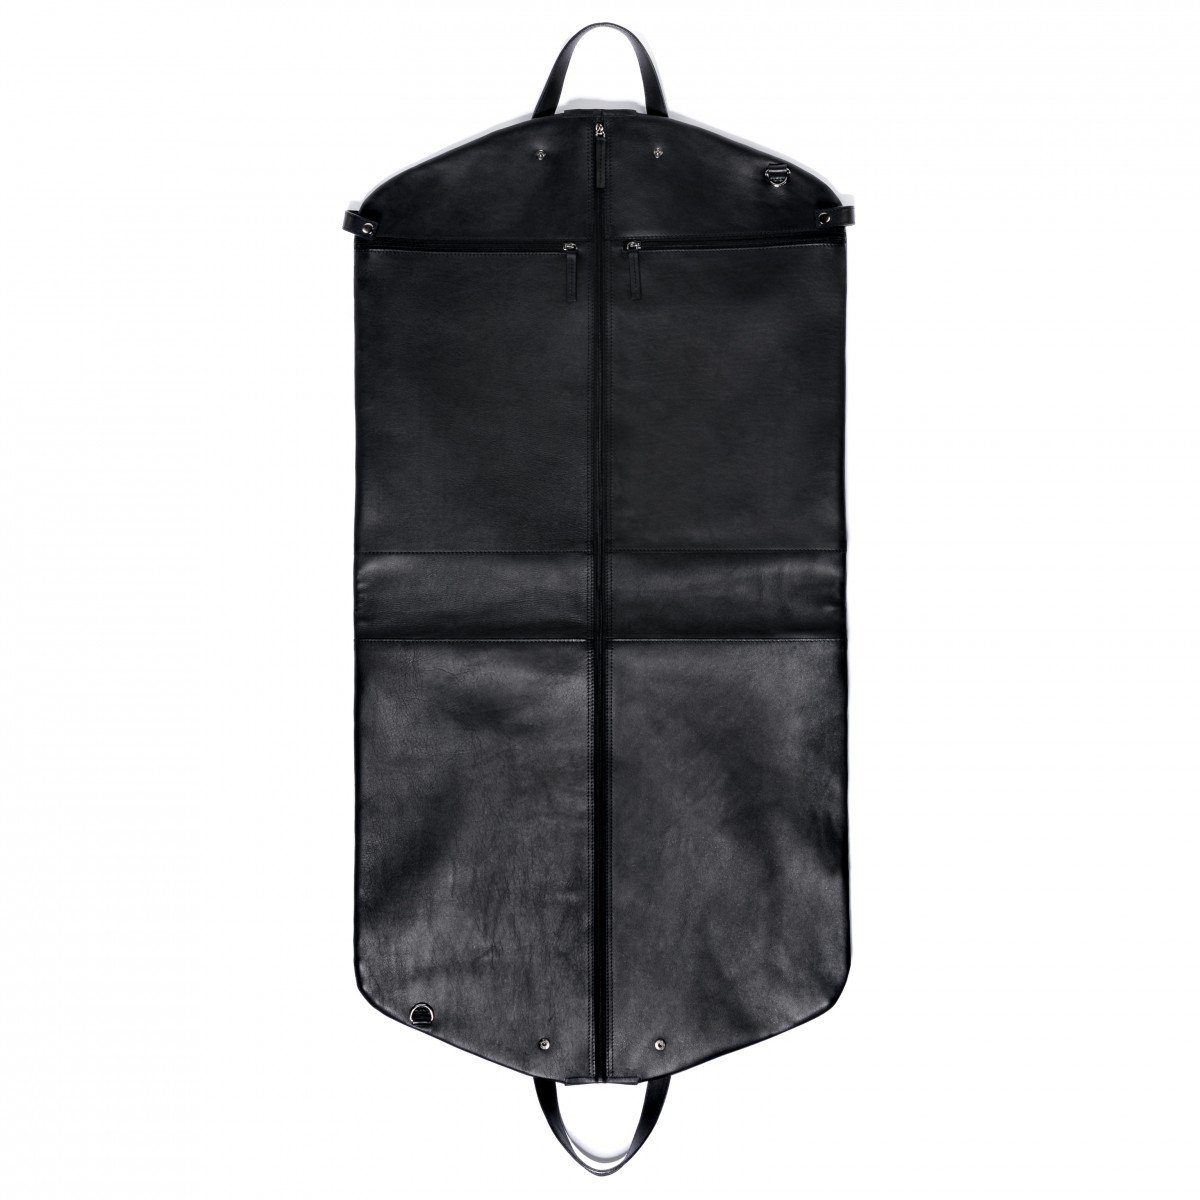 Reisetasche schwarz FEYNSINN Kleidersack echt ARIK, Anzugsack Leder